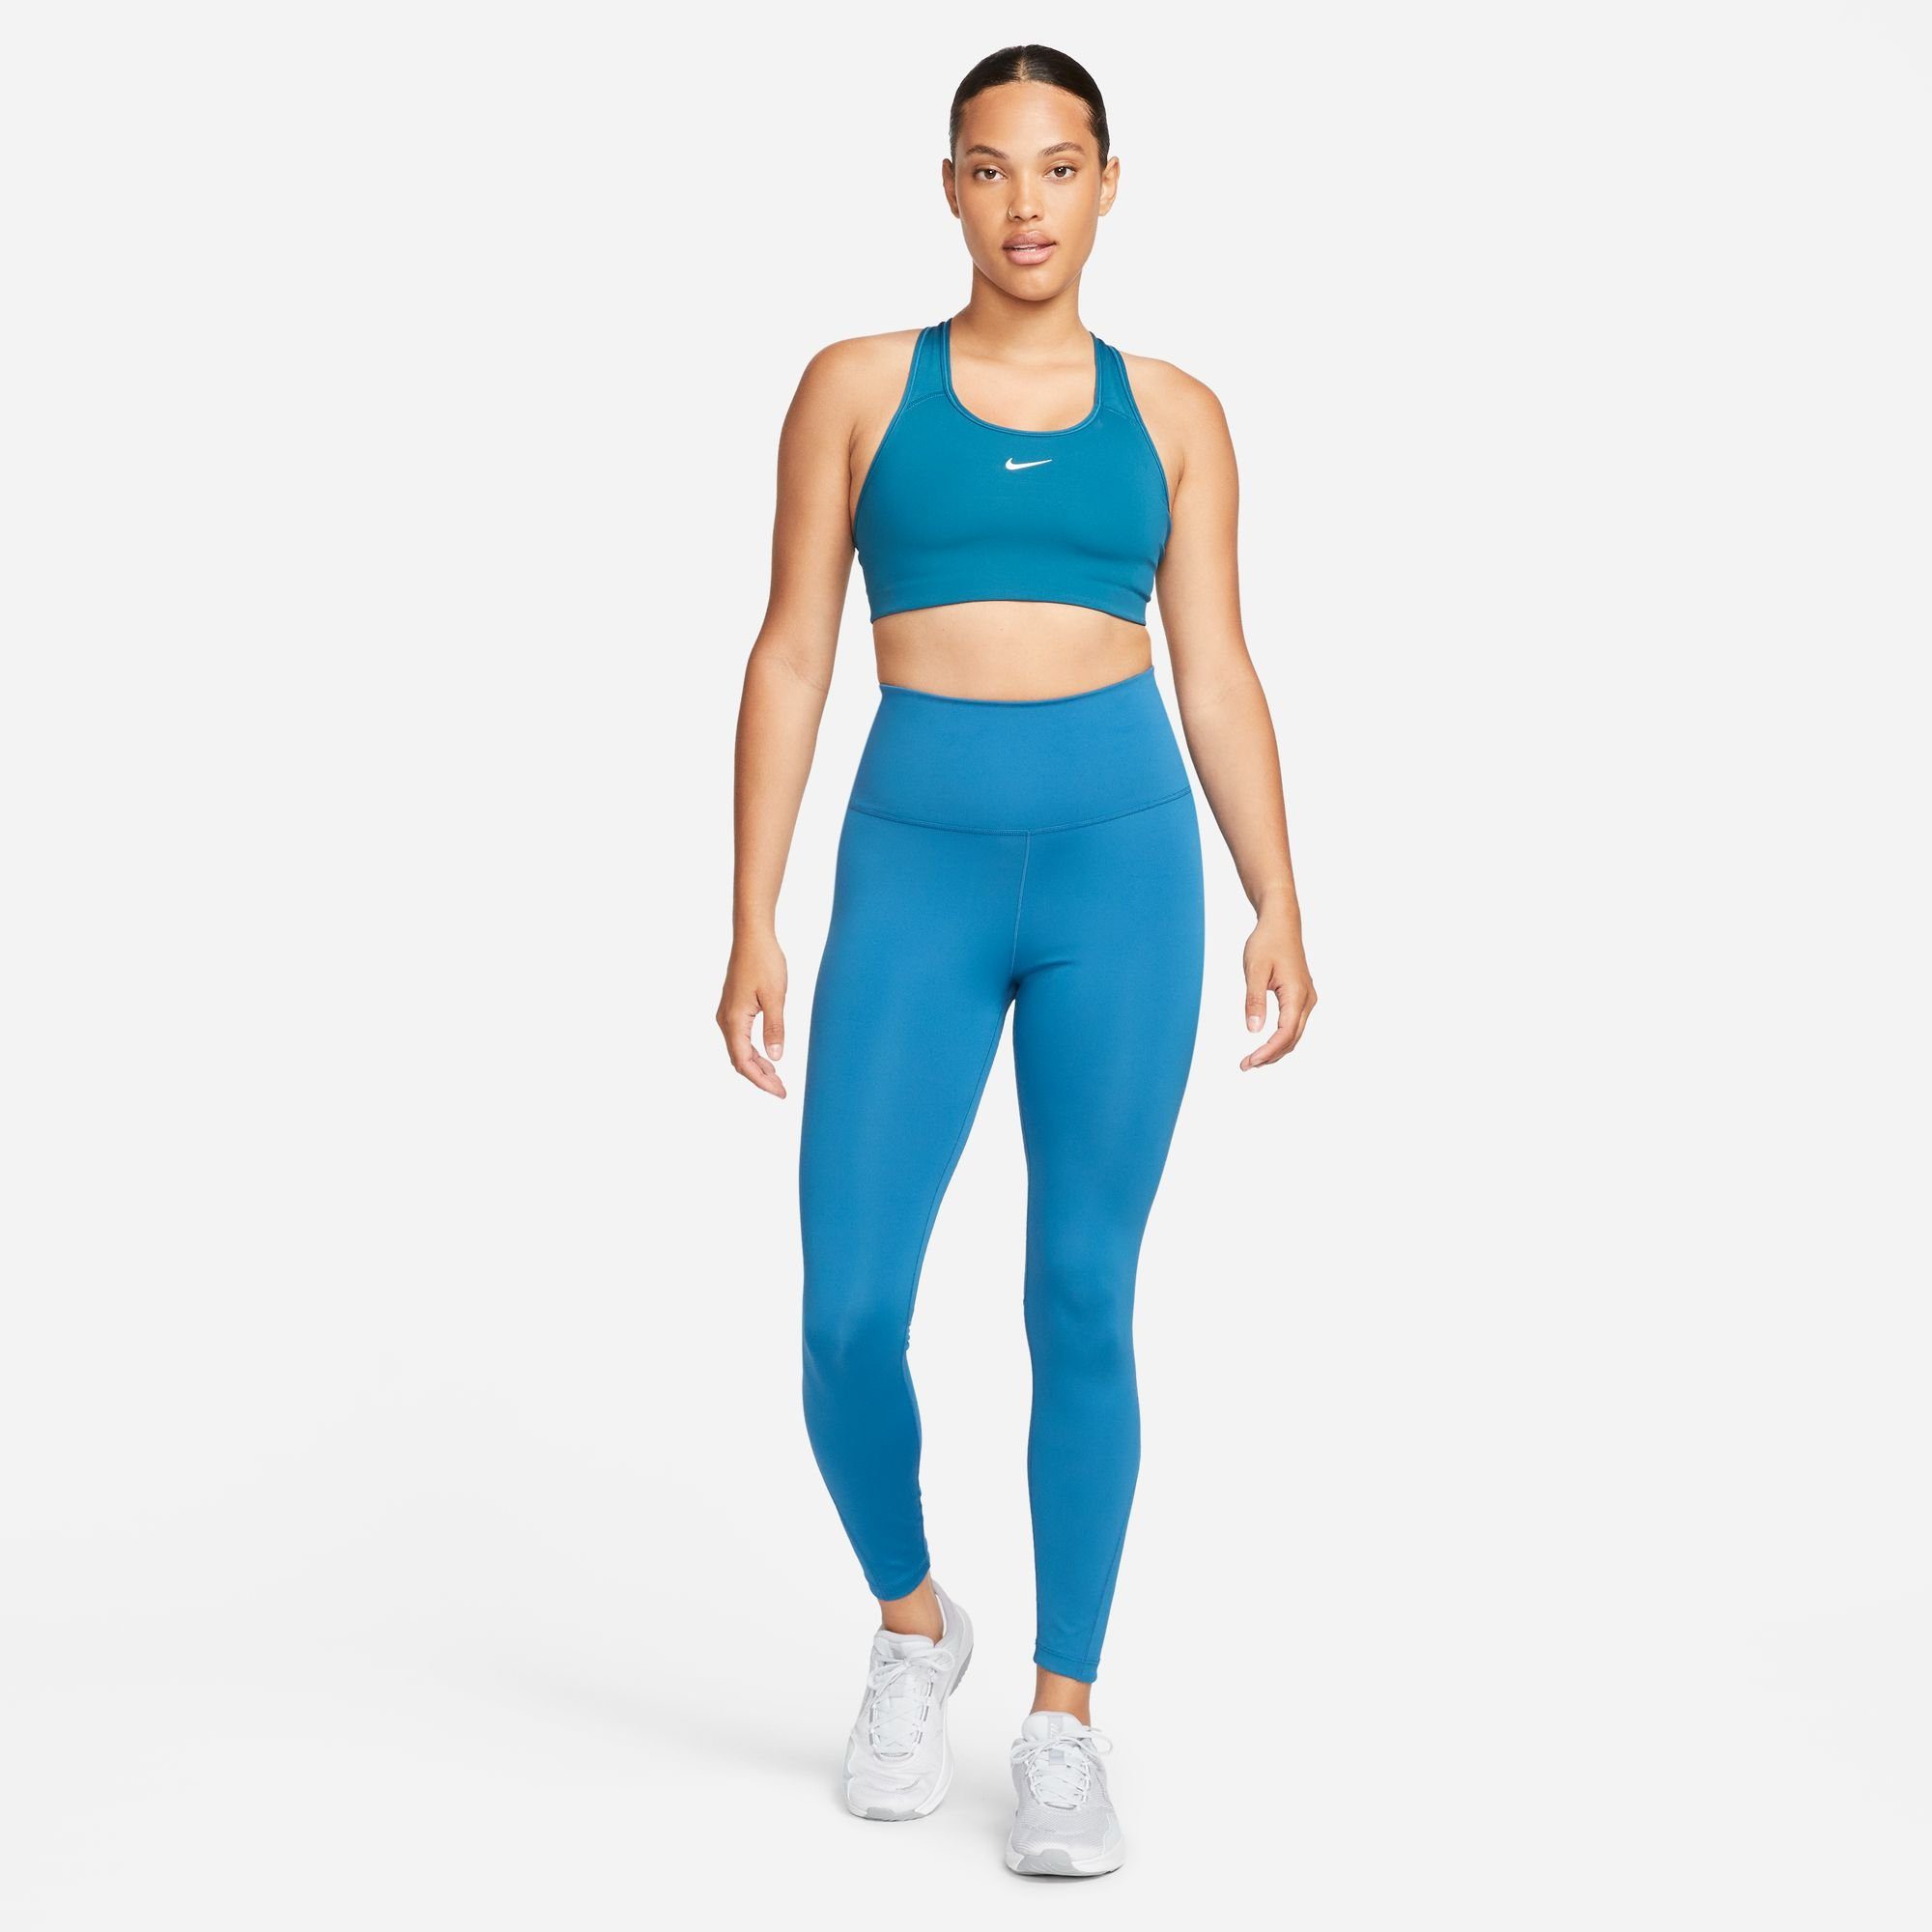 WOMEN'S ONE INDUSTRIAL LEGGINGS BLUE/WHITE HIGH-WAISTED Nike / Trainingstights